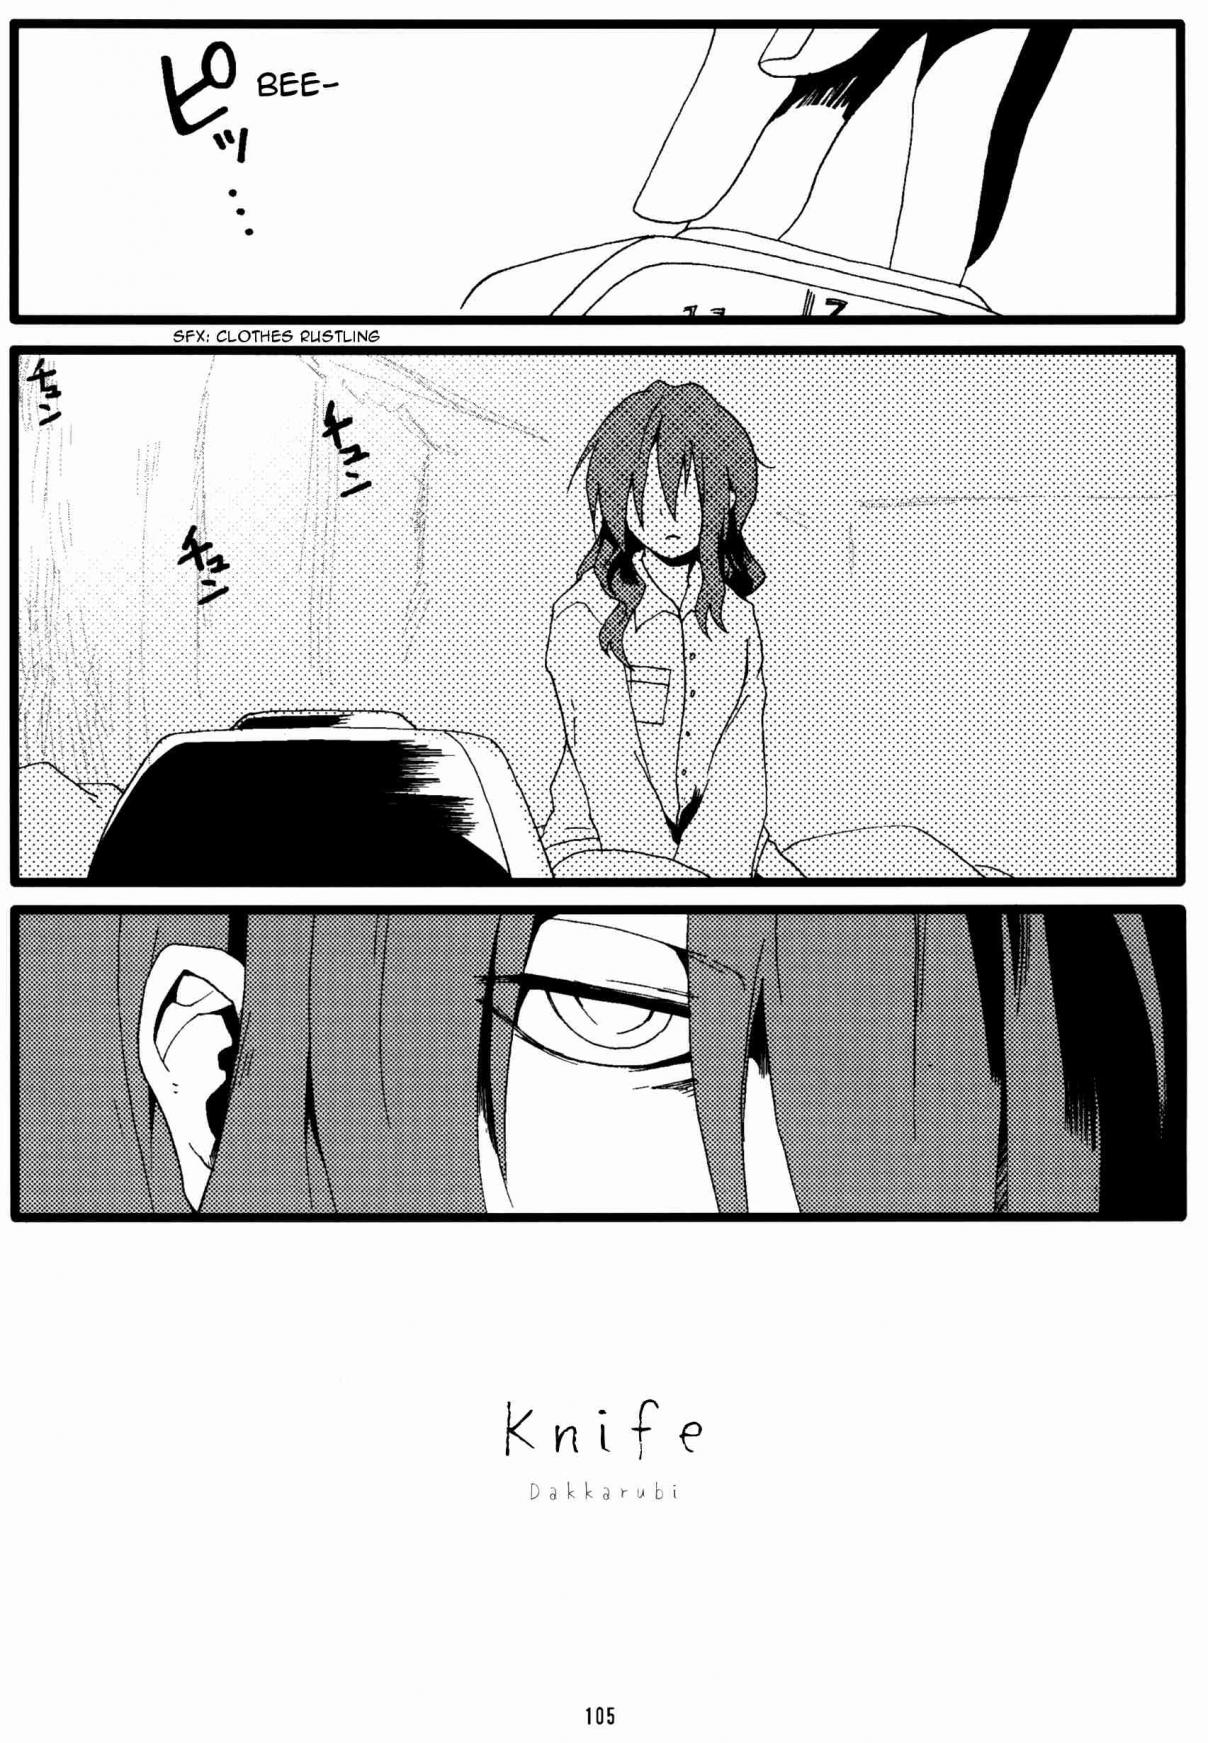 Effects Vol. 1 Ch. 12 Knife